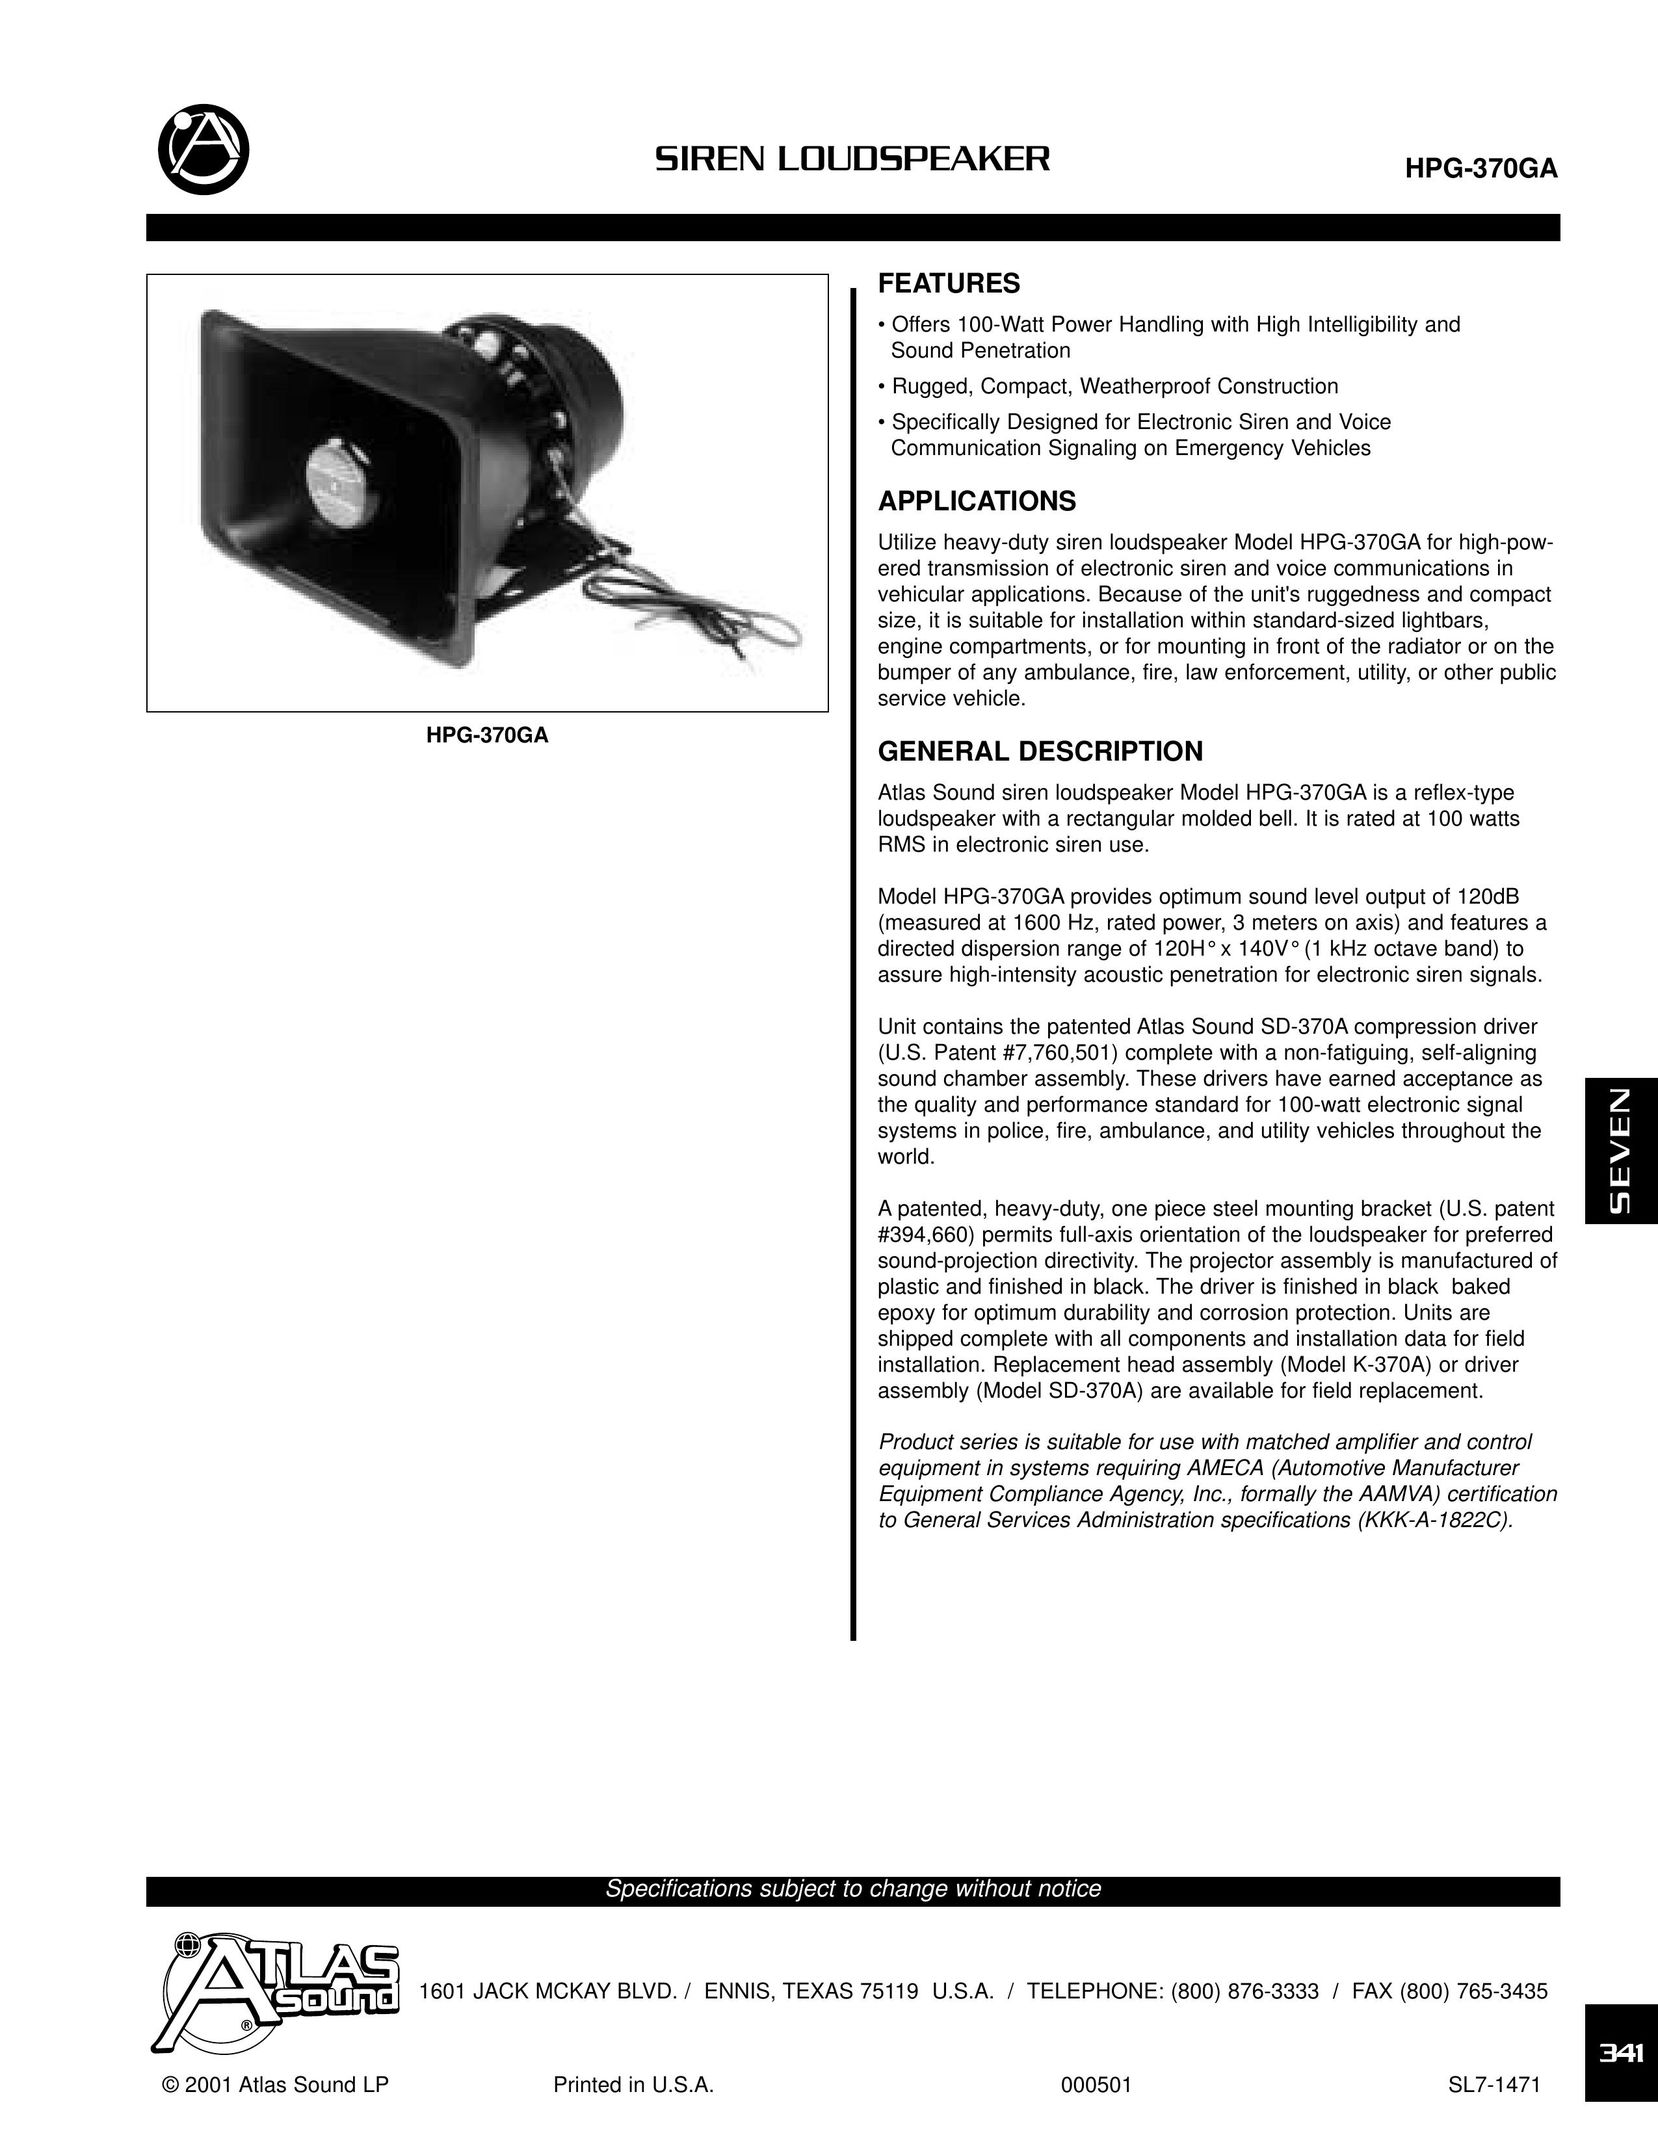 Atlas Sound K-370 Speaker User Manual